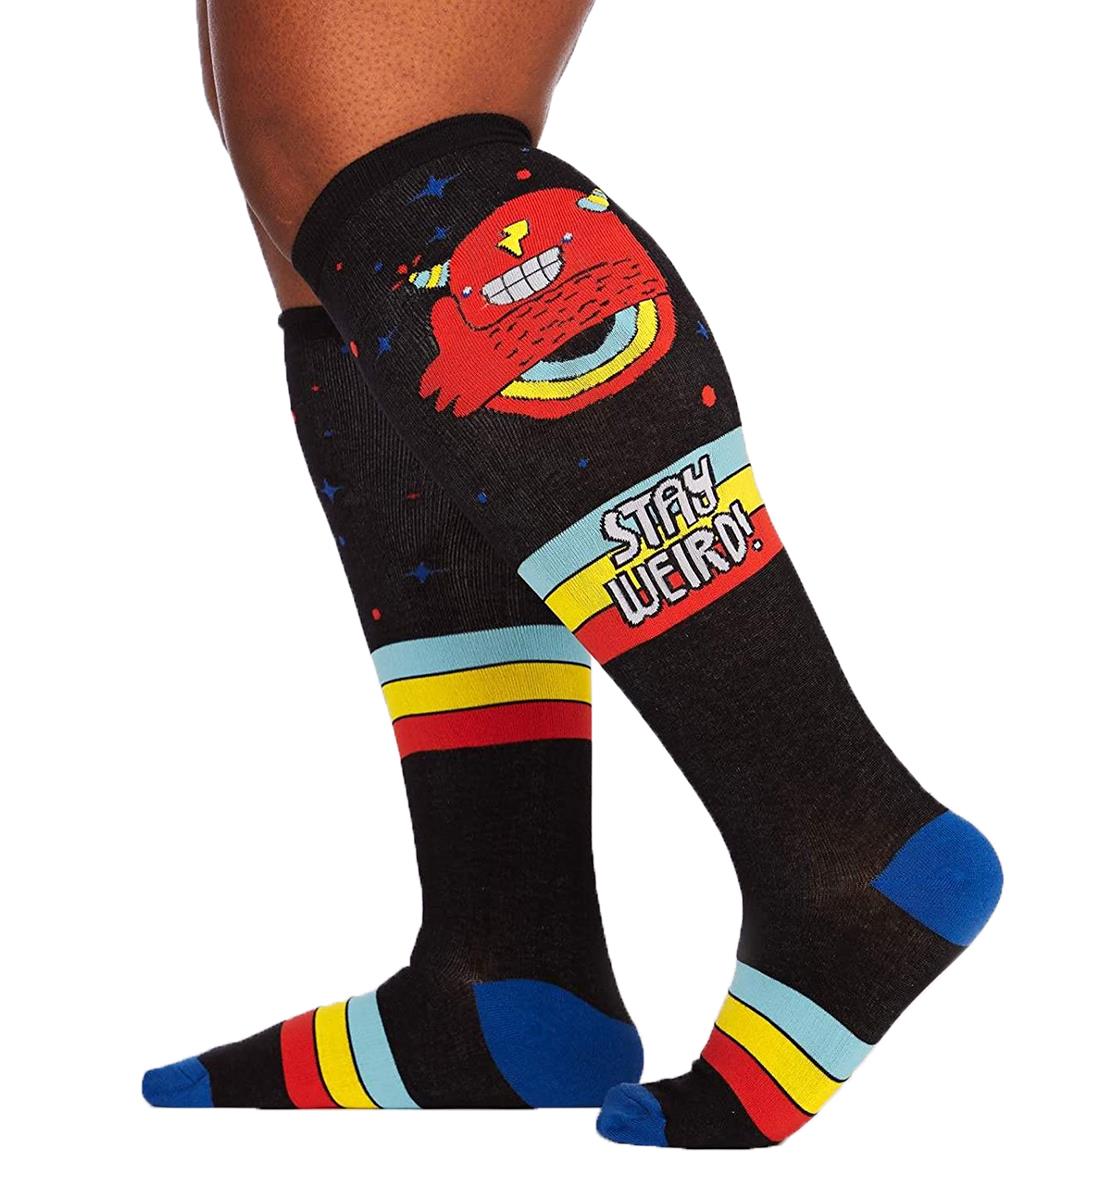 SOCK it to me Unisex Stretch-It Knee High Socks (s0059),Stay Weird! - Stay Weird!,One Size